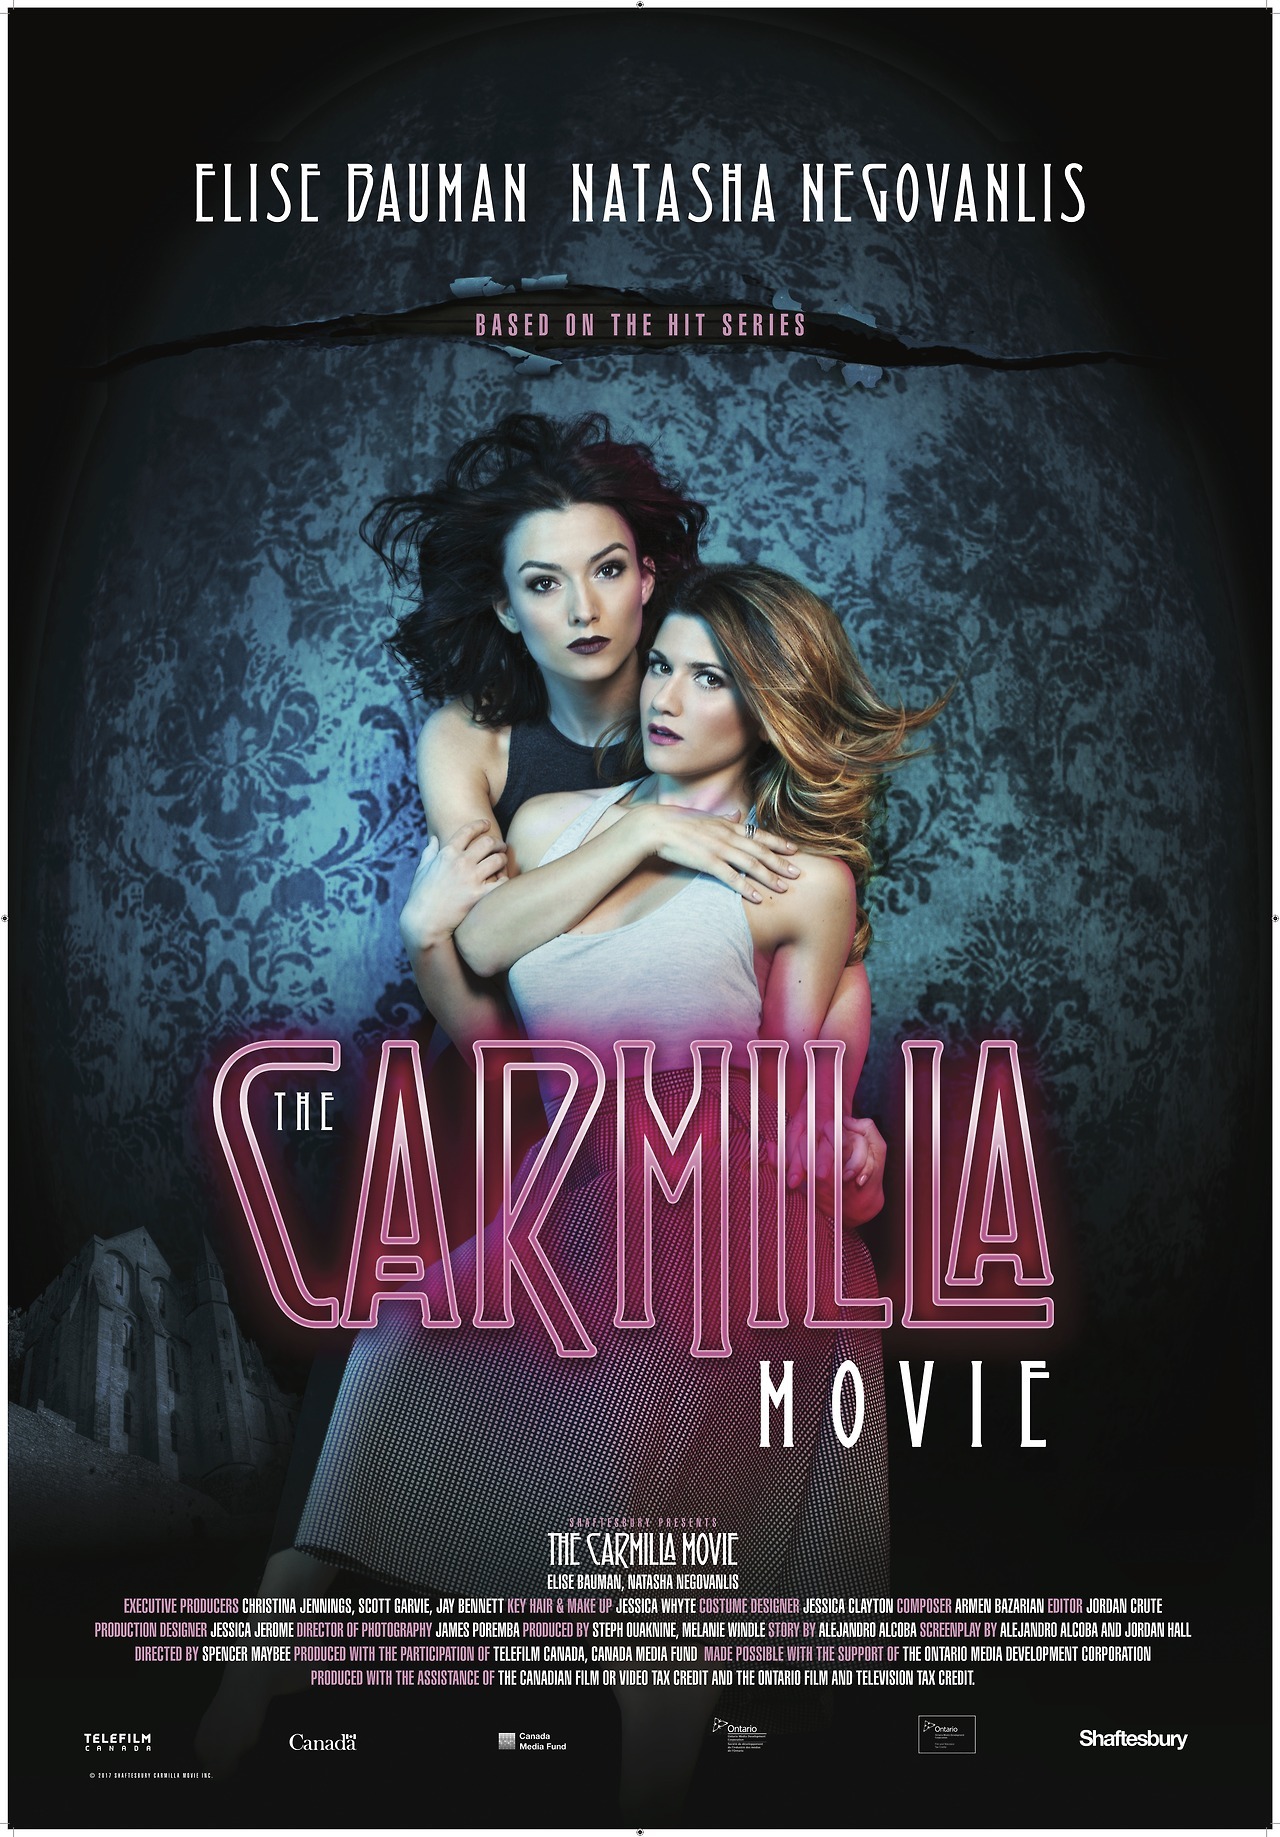 The Carmilla Movie online